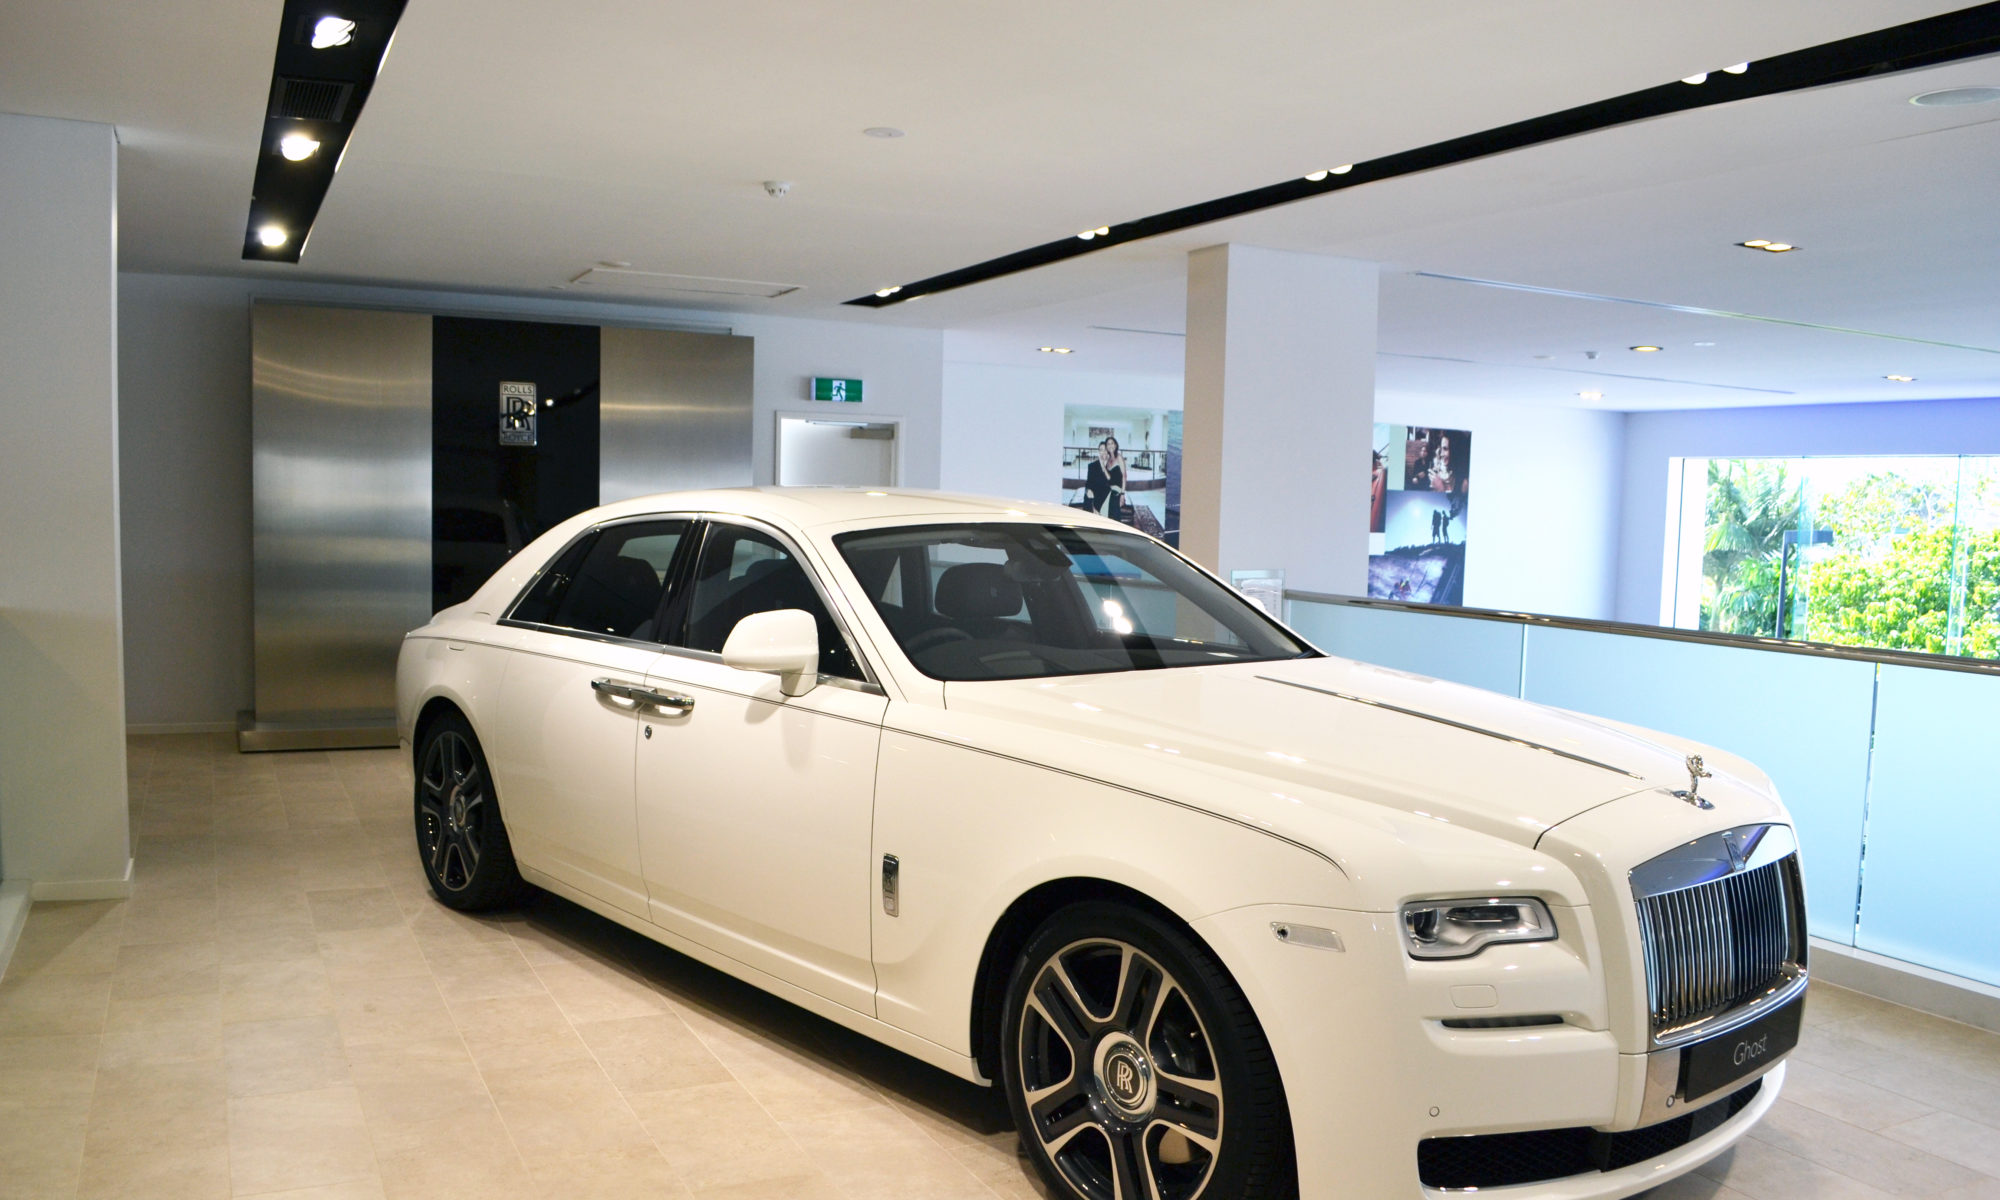 Sunshine Rolls Royce by Birchall & Partners Architects, Gold Coast